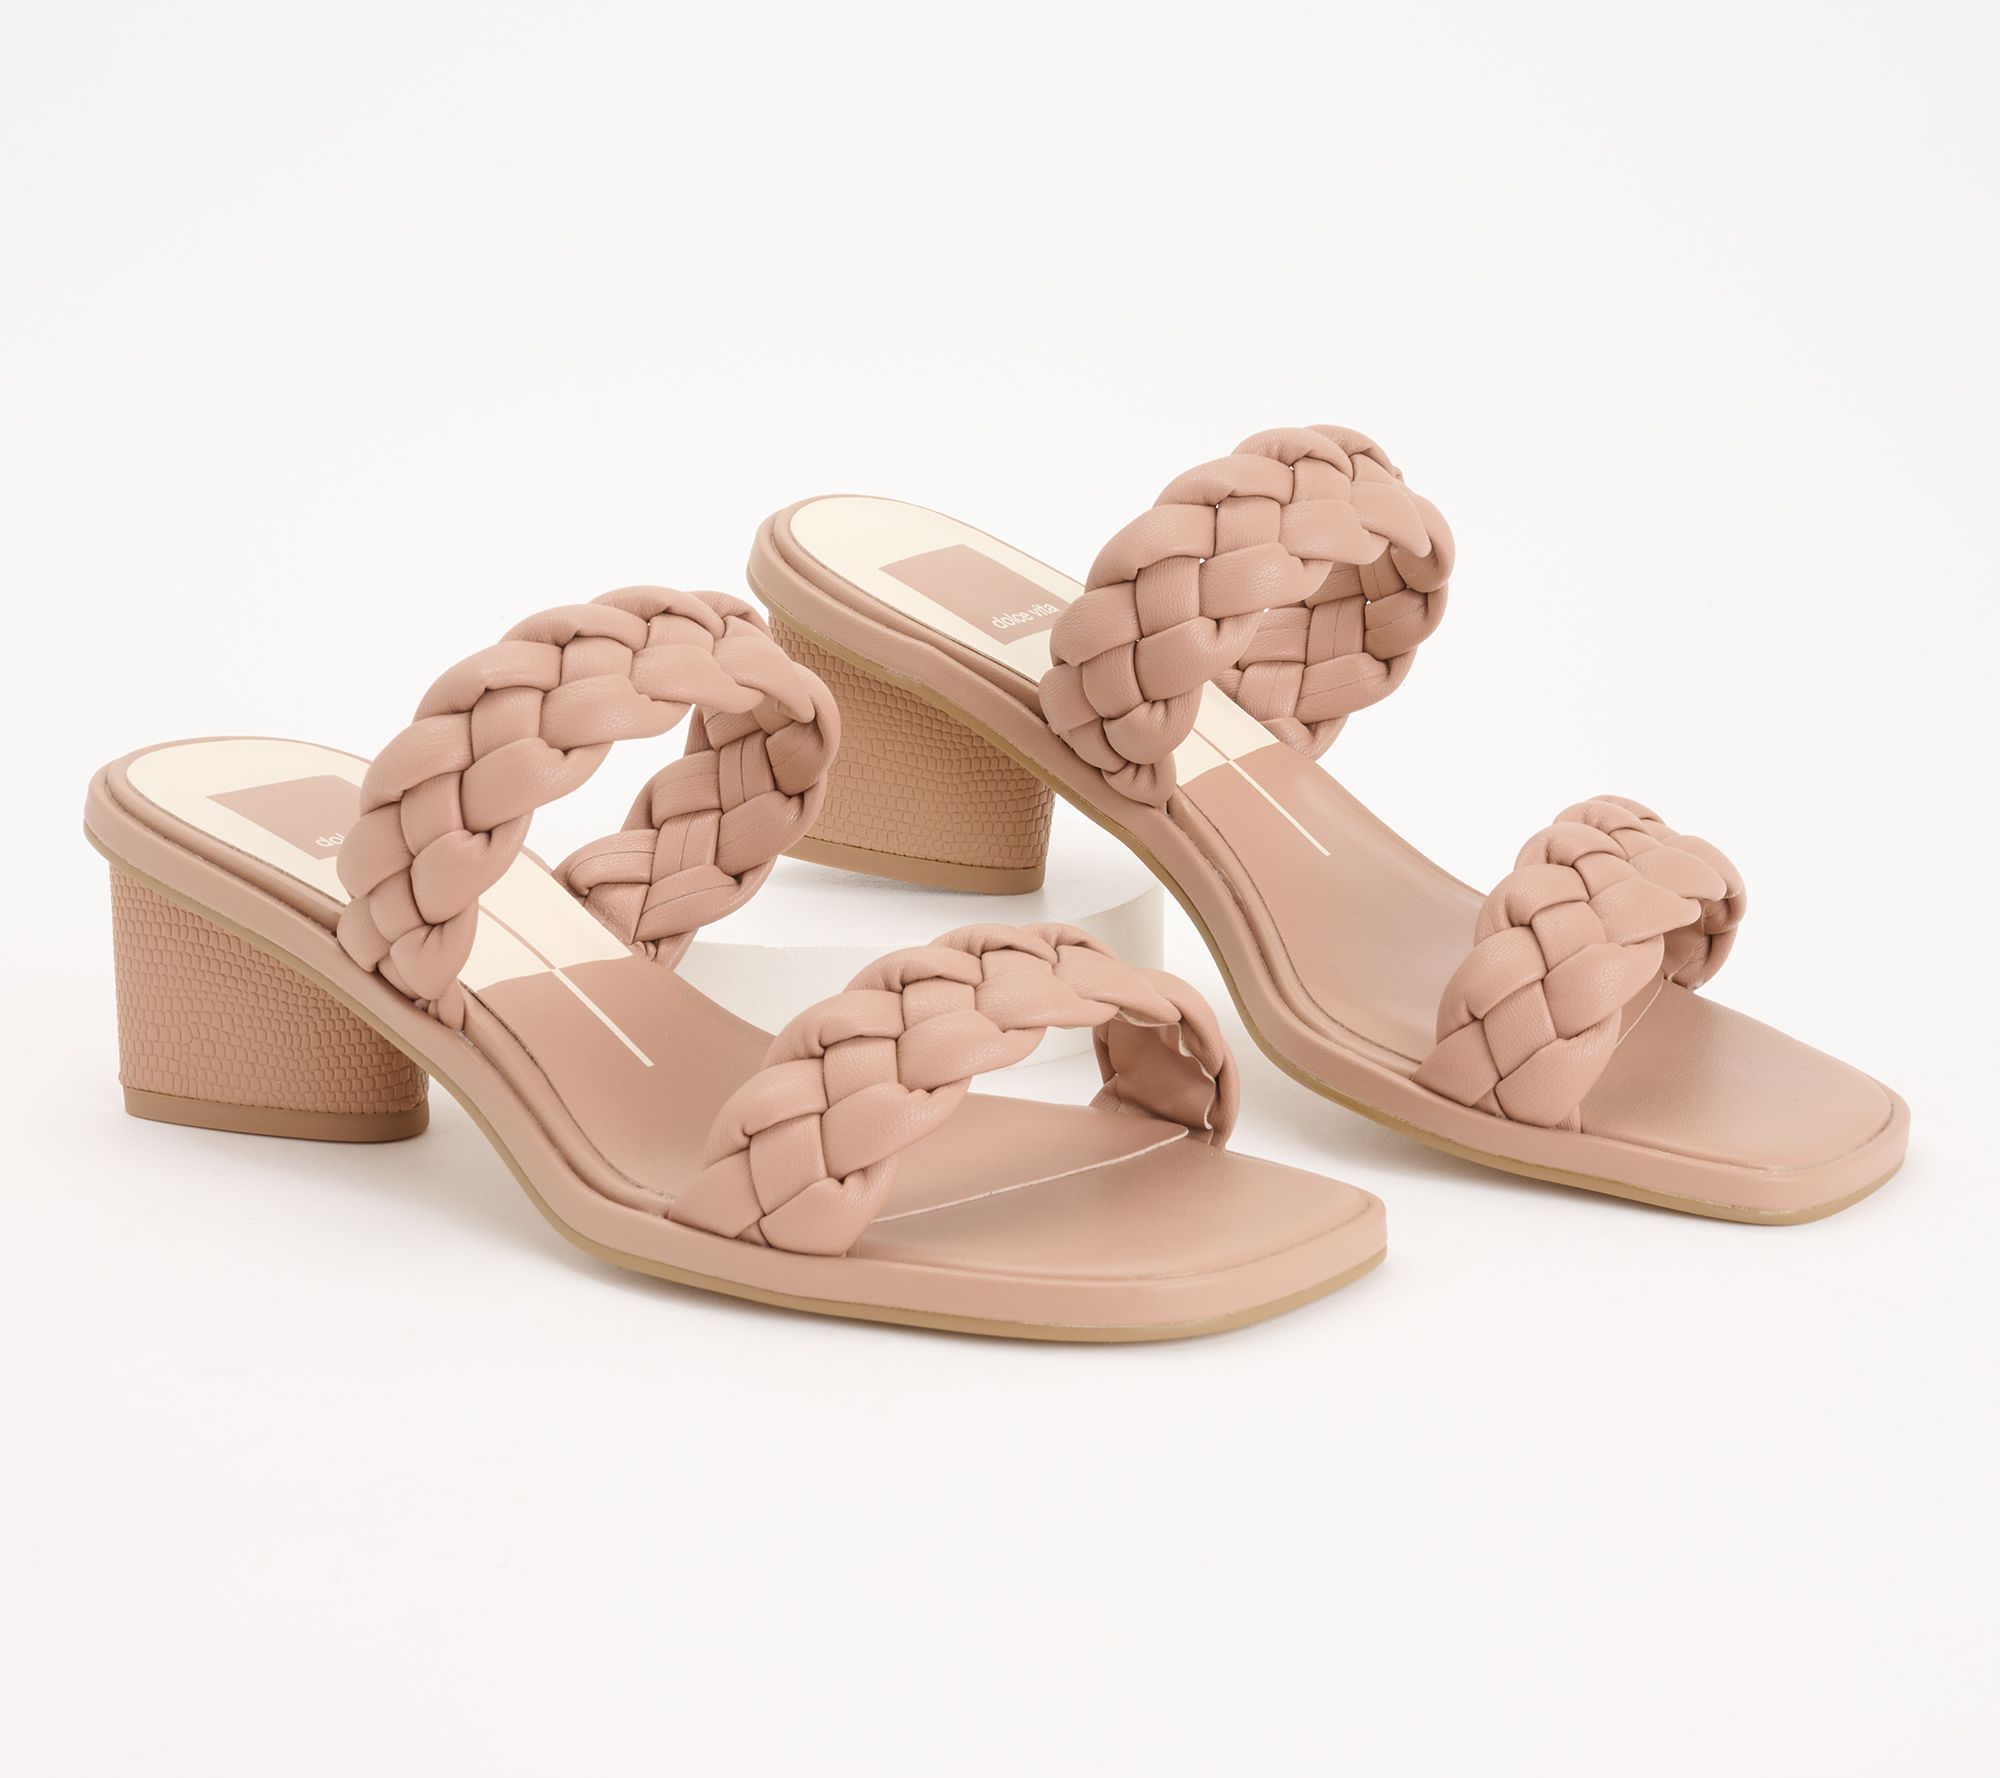 Dolce Vita Braided Mid Heeled Sandals - Ronin - QVC.com